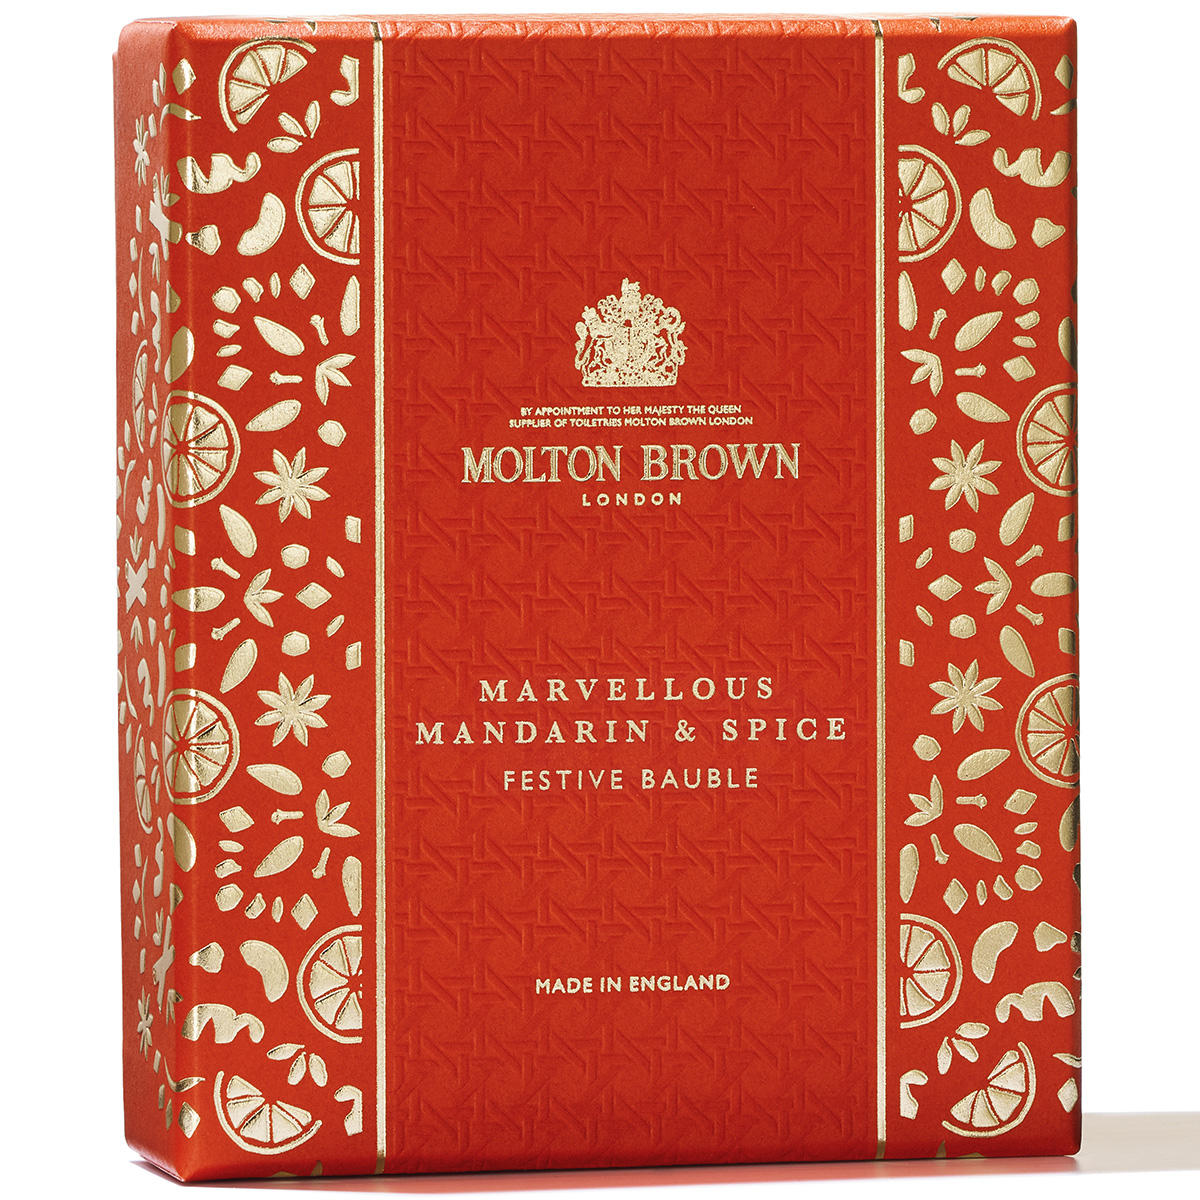 MOLTON BROWN Marvellous Mandarin & Spice Festive Bauble 75 ml - 2